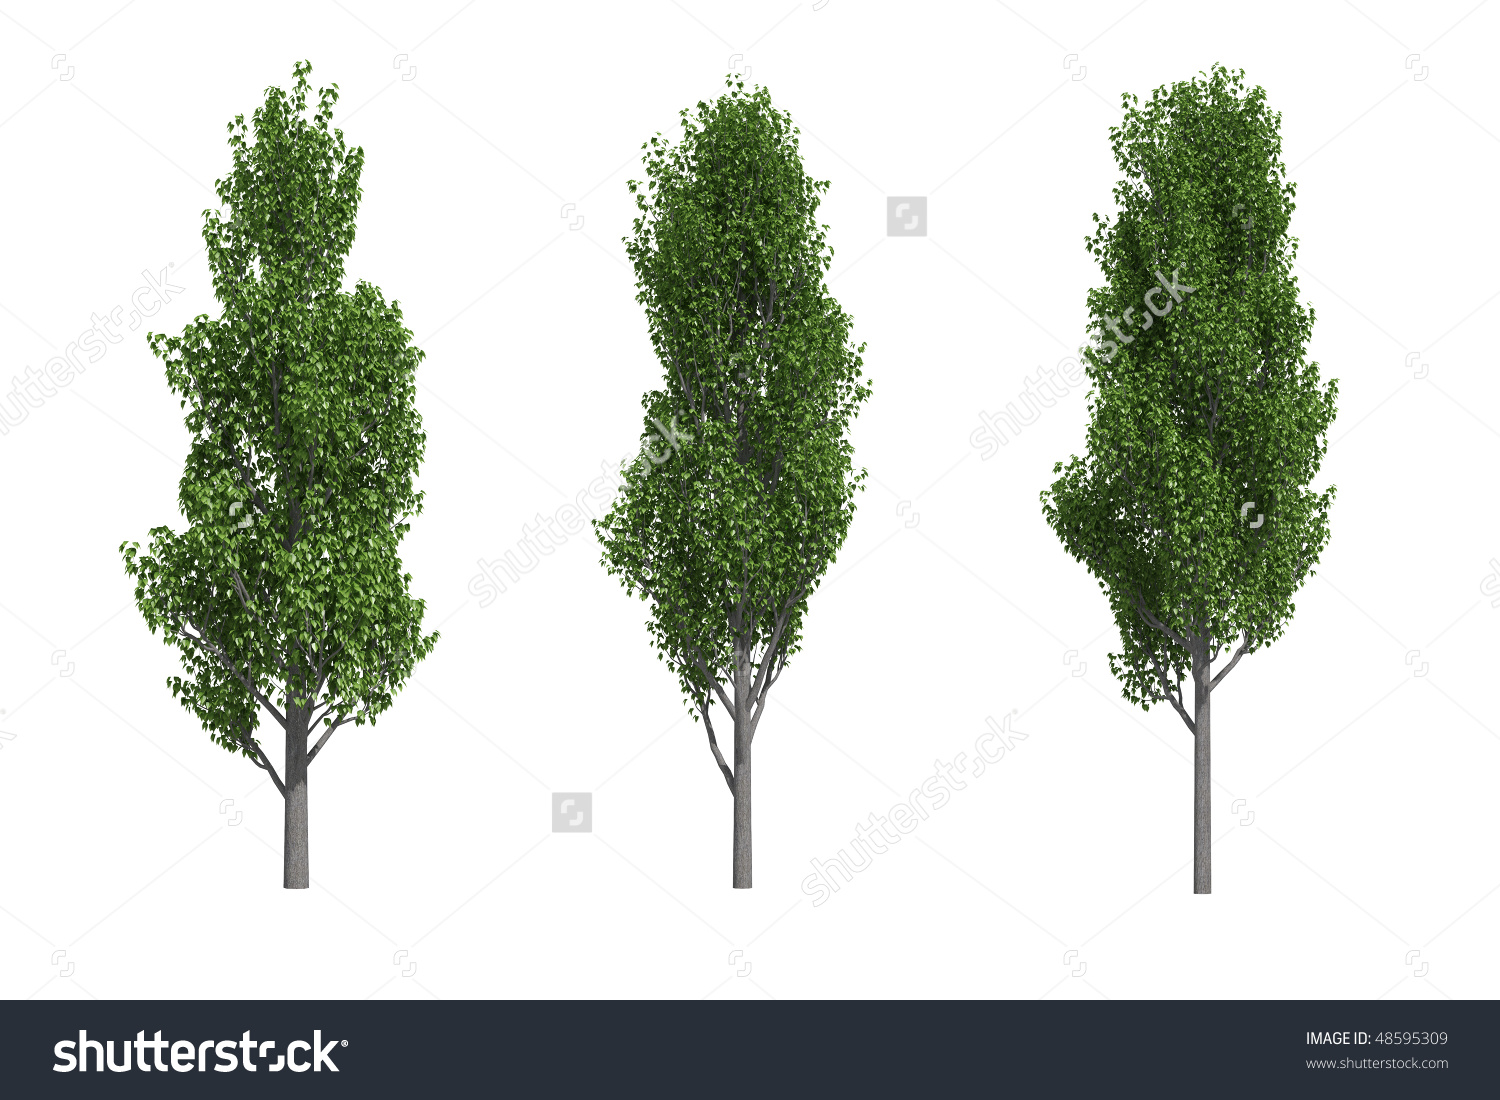 Poplar Trees Isolated On White Background Stock Illustration.